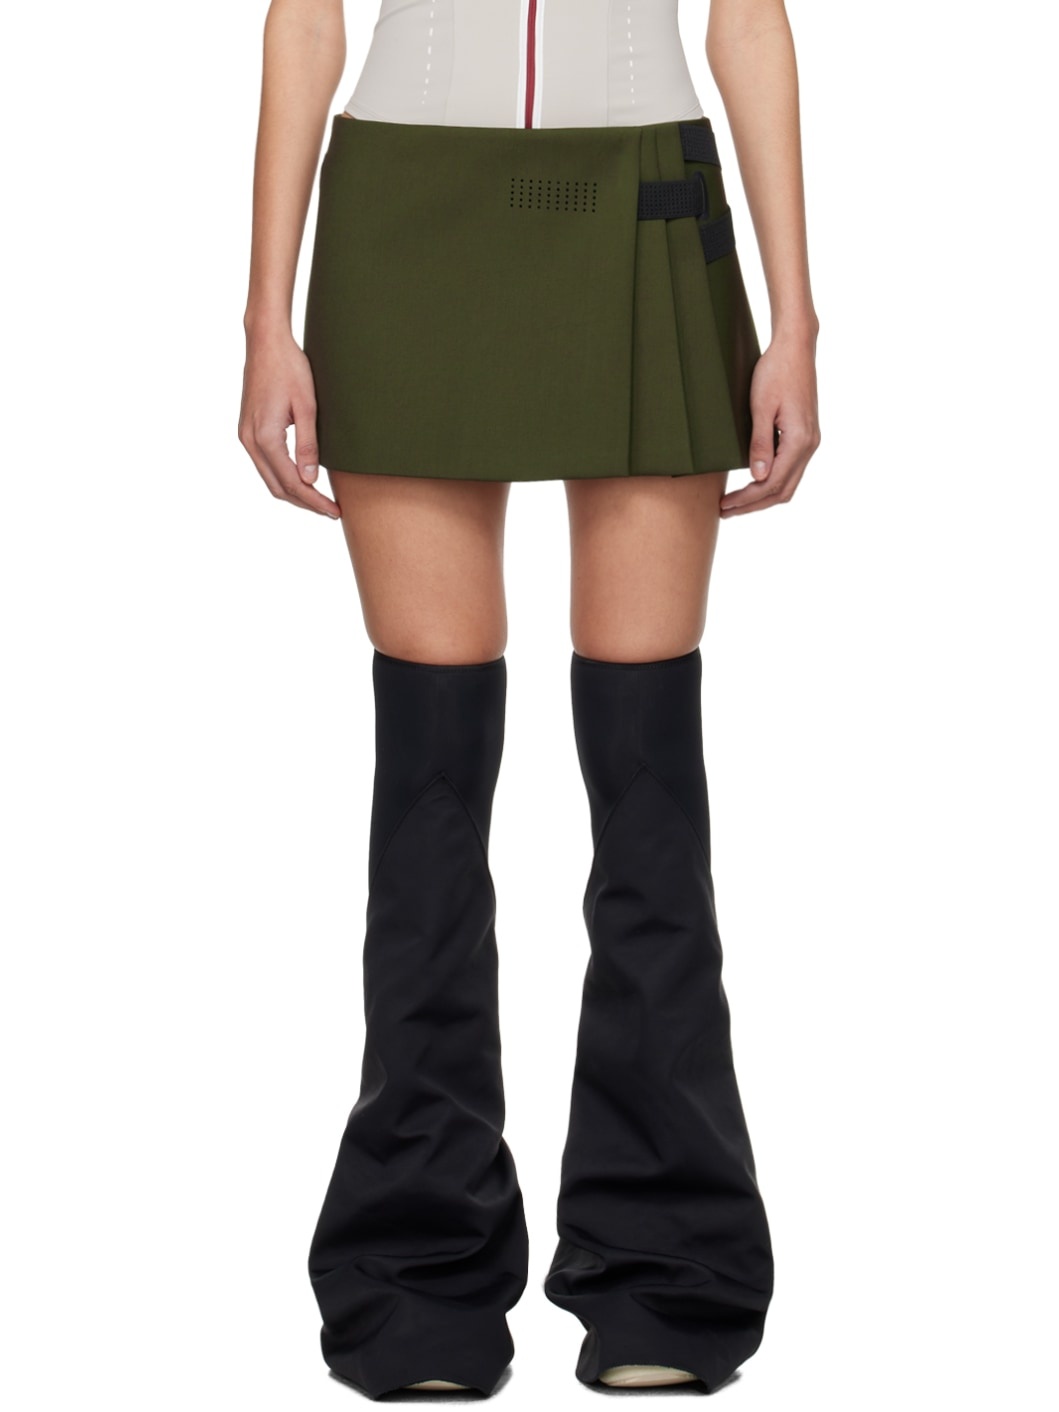 SSENSE Exclusive Khaki Miniskirt - 1